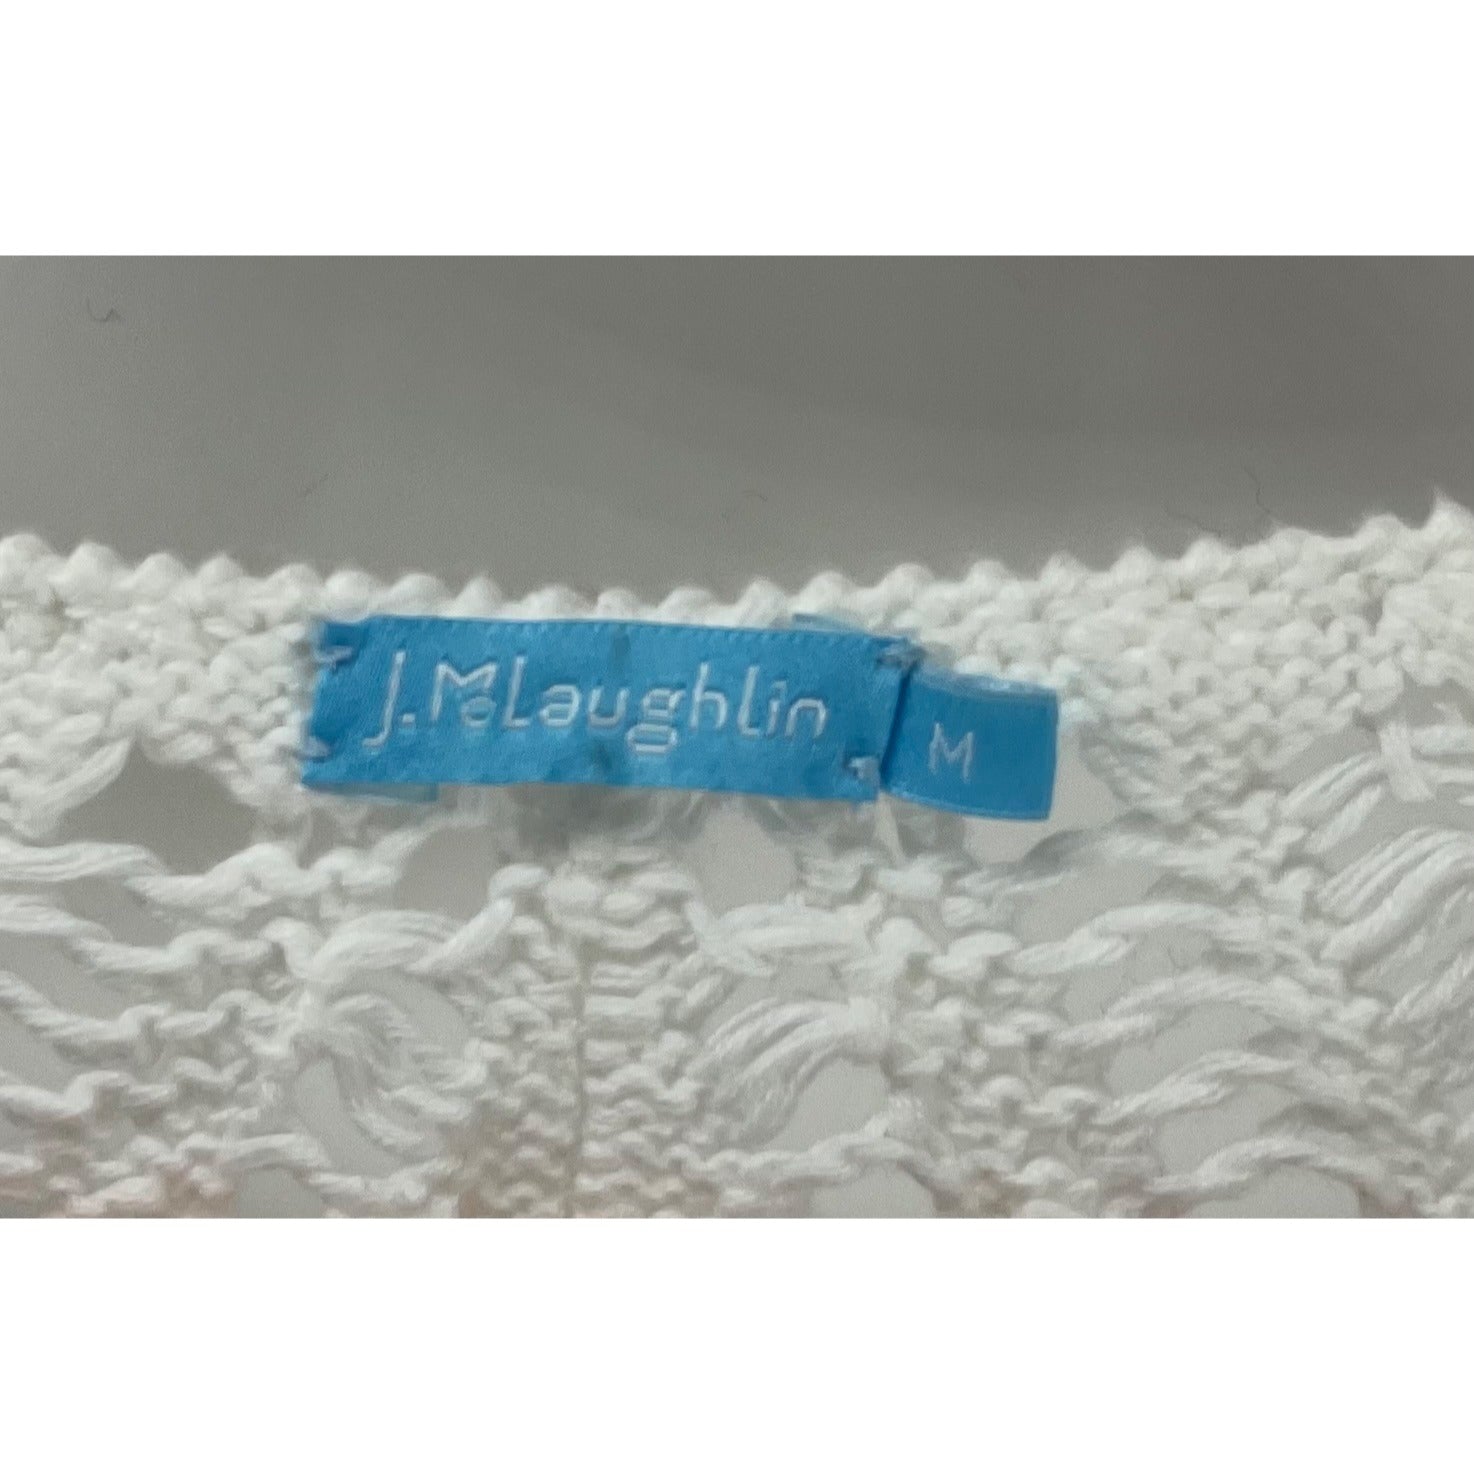 J. M. McLaughlin Women’s Medium White Mesh Sweater